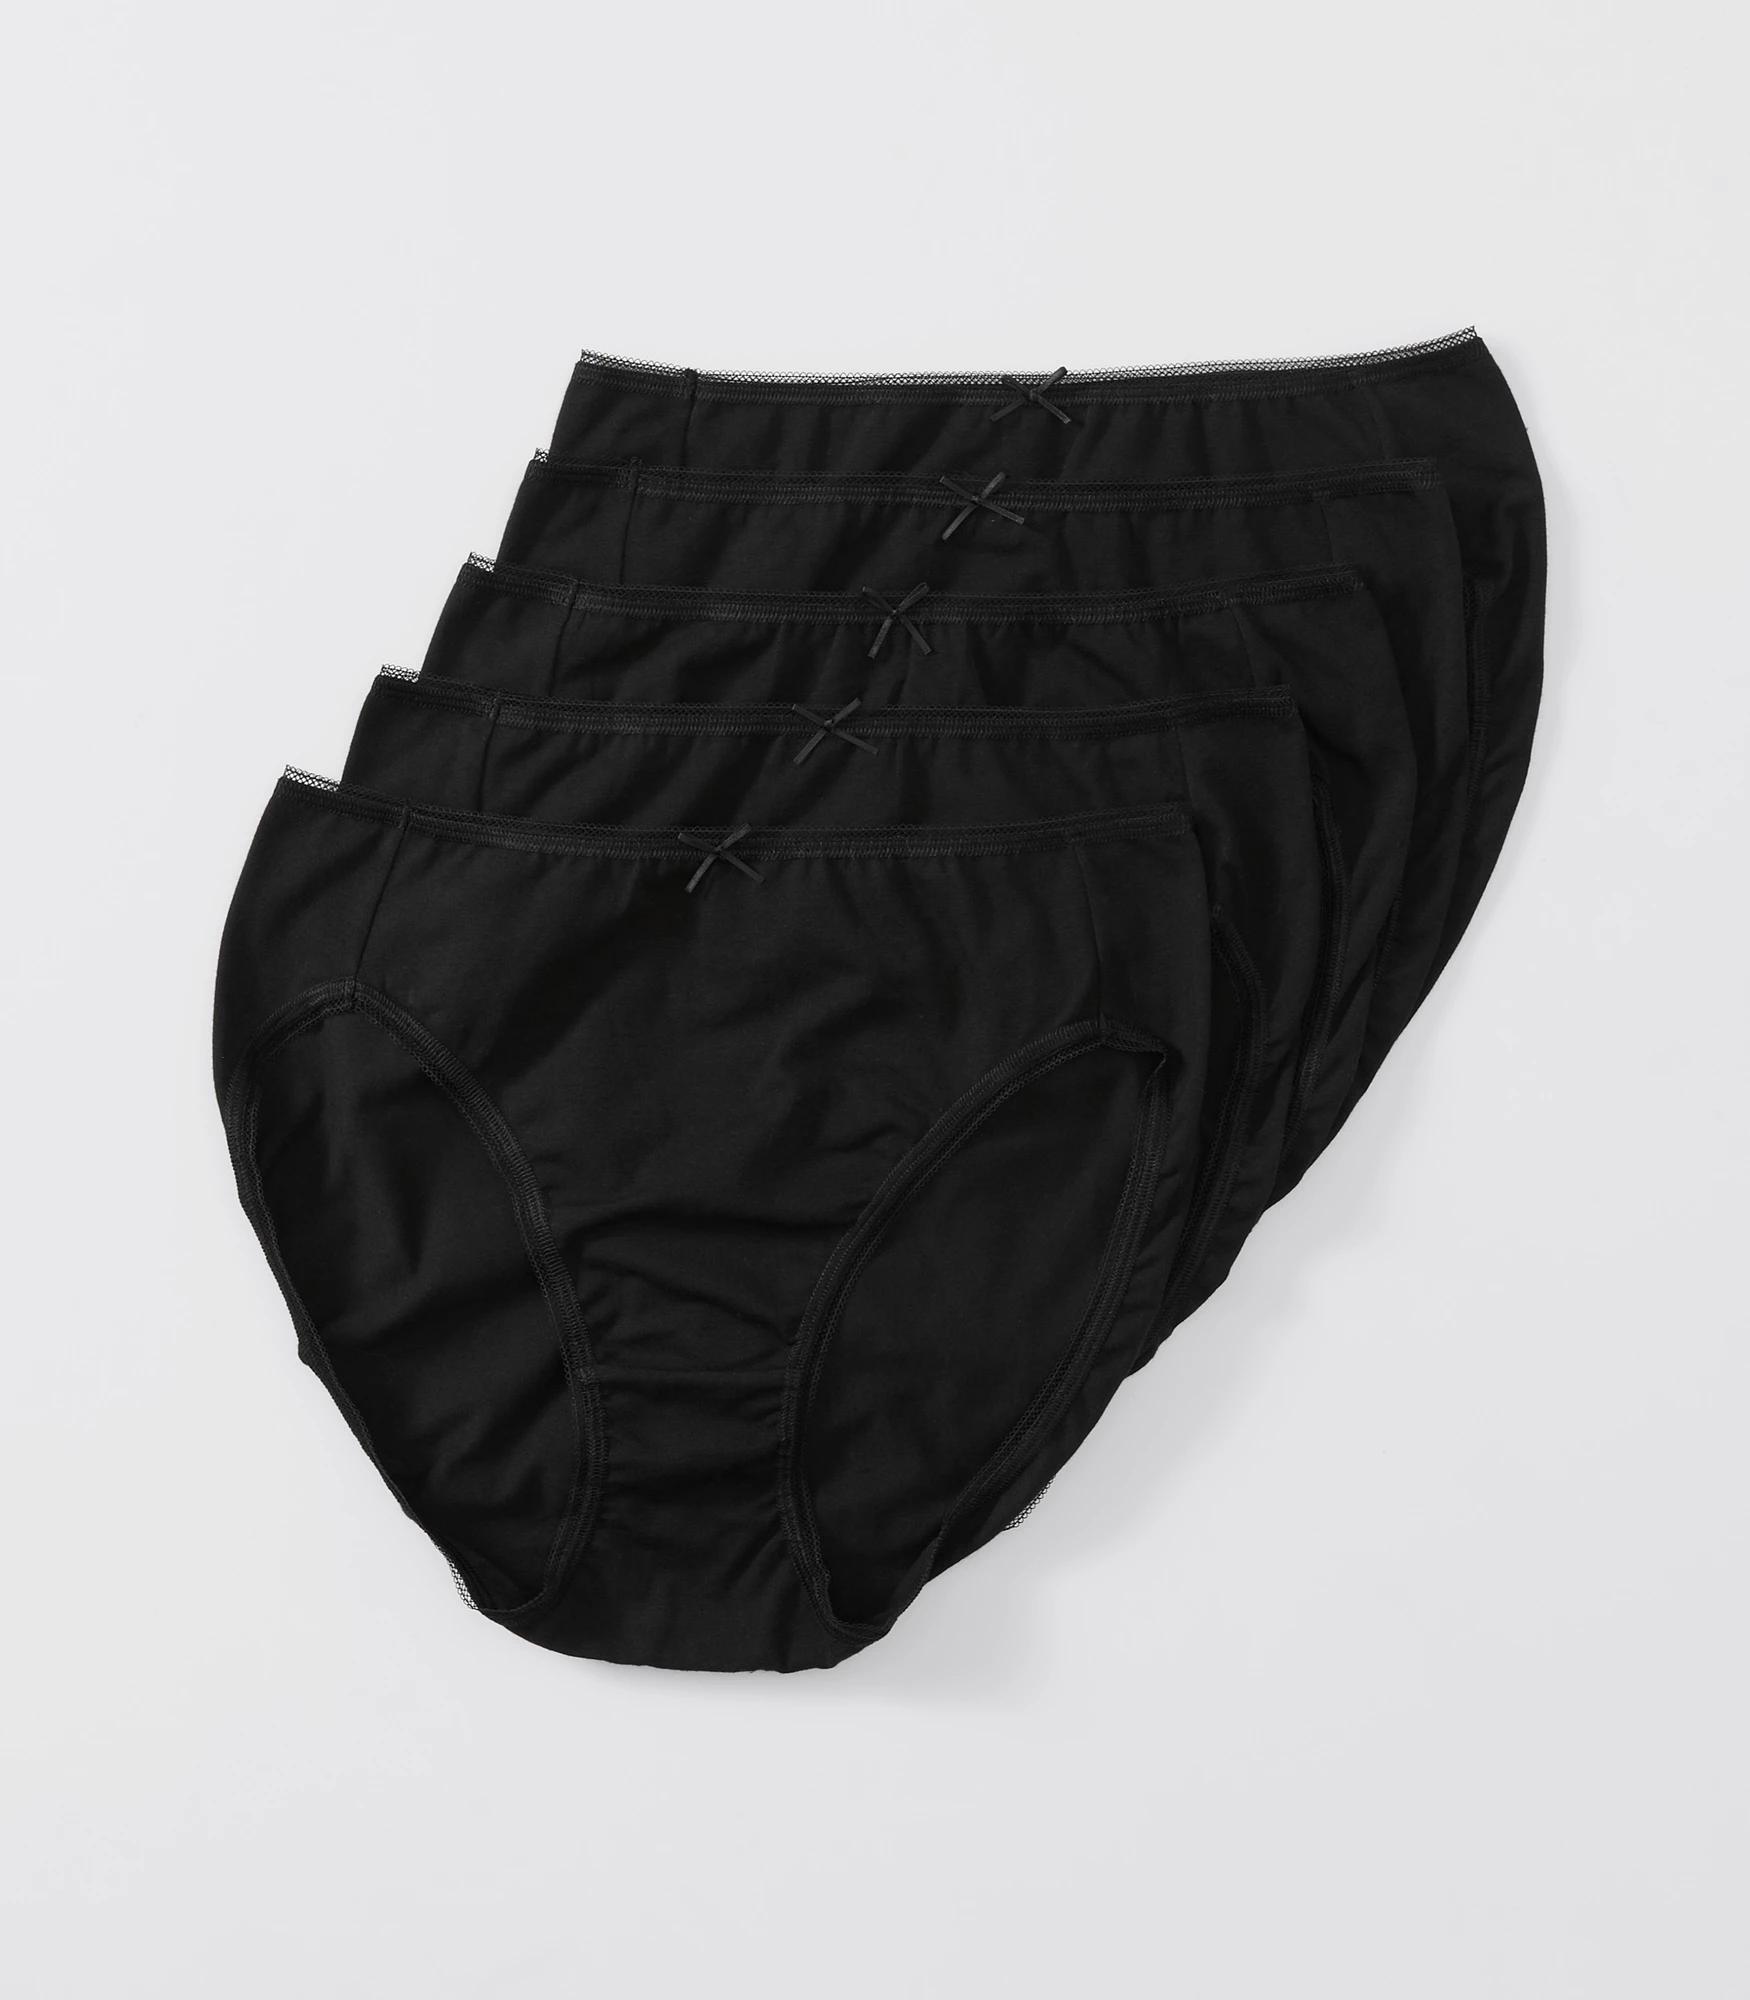 Proof Underwear Overnight High Rise Briefs - Small - Black : Target